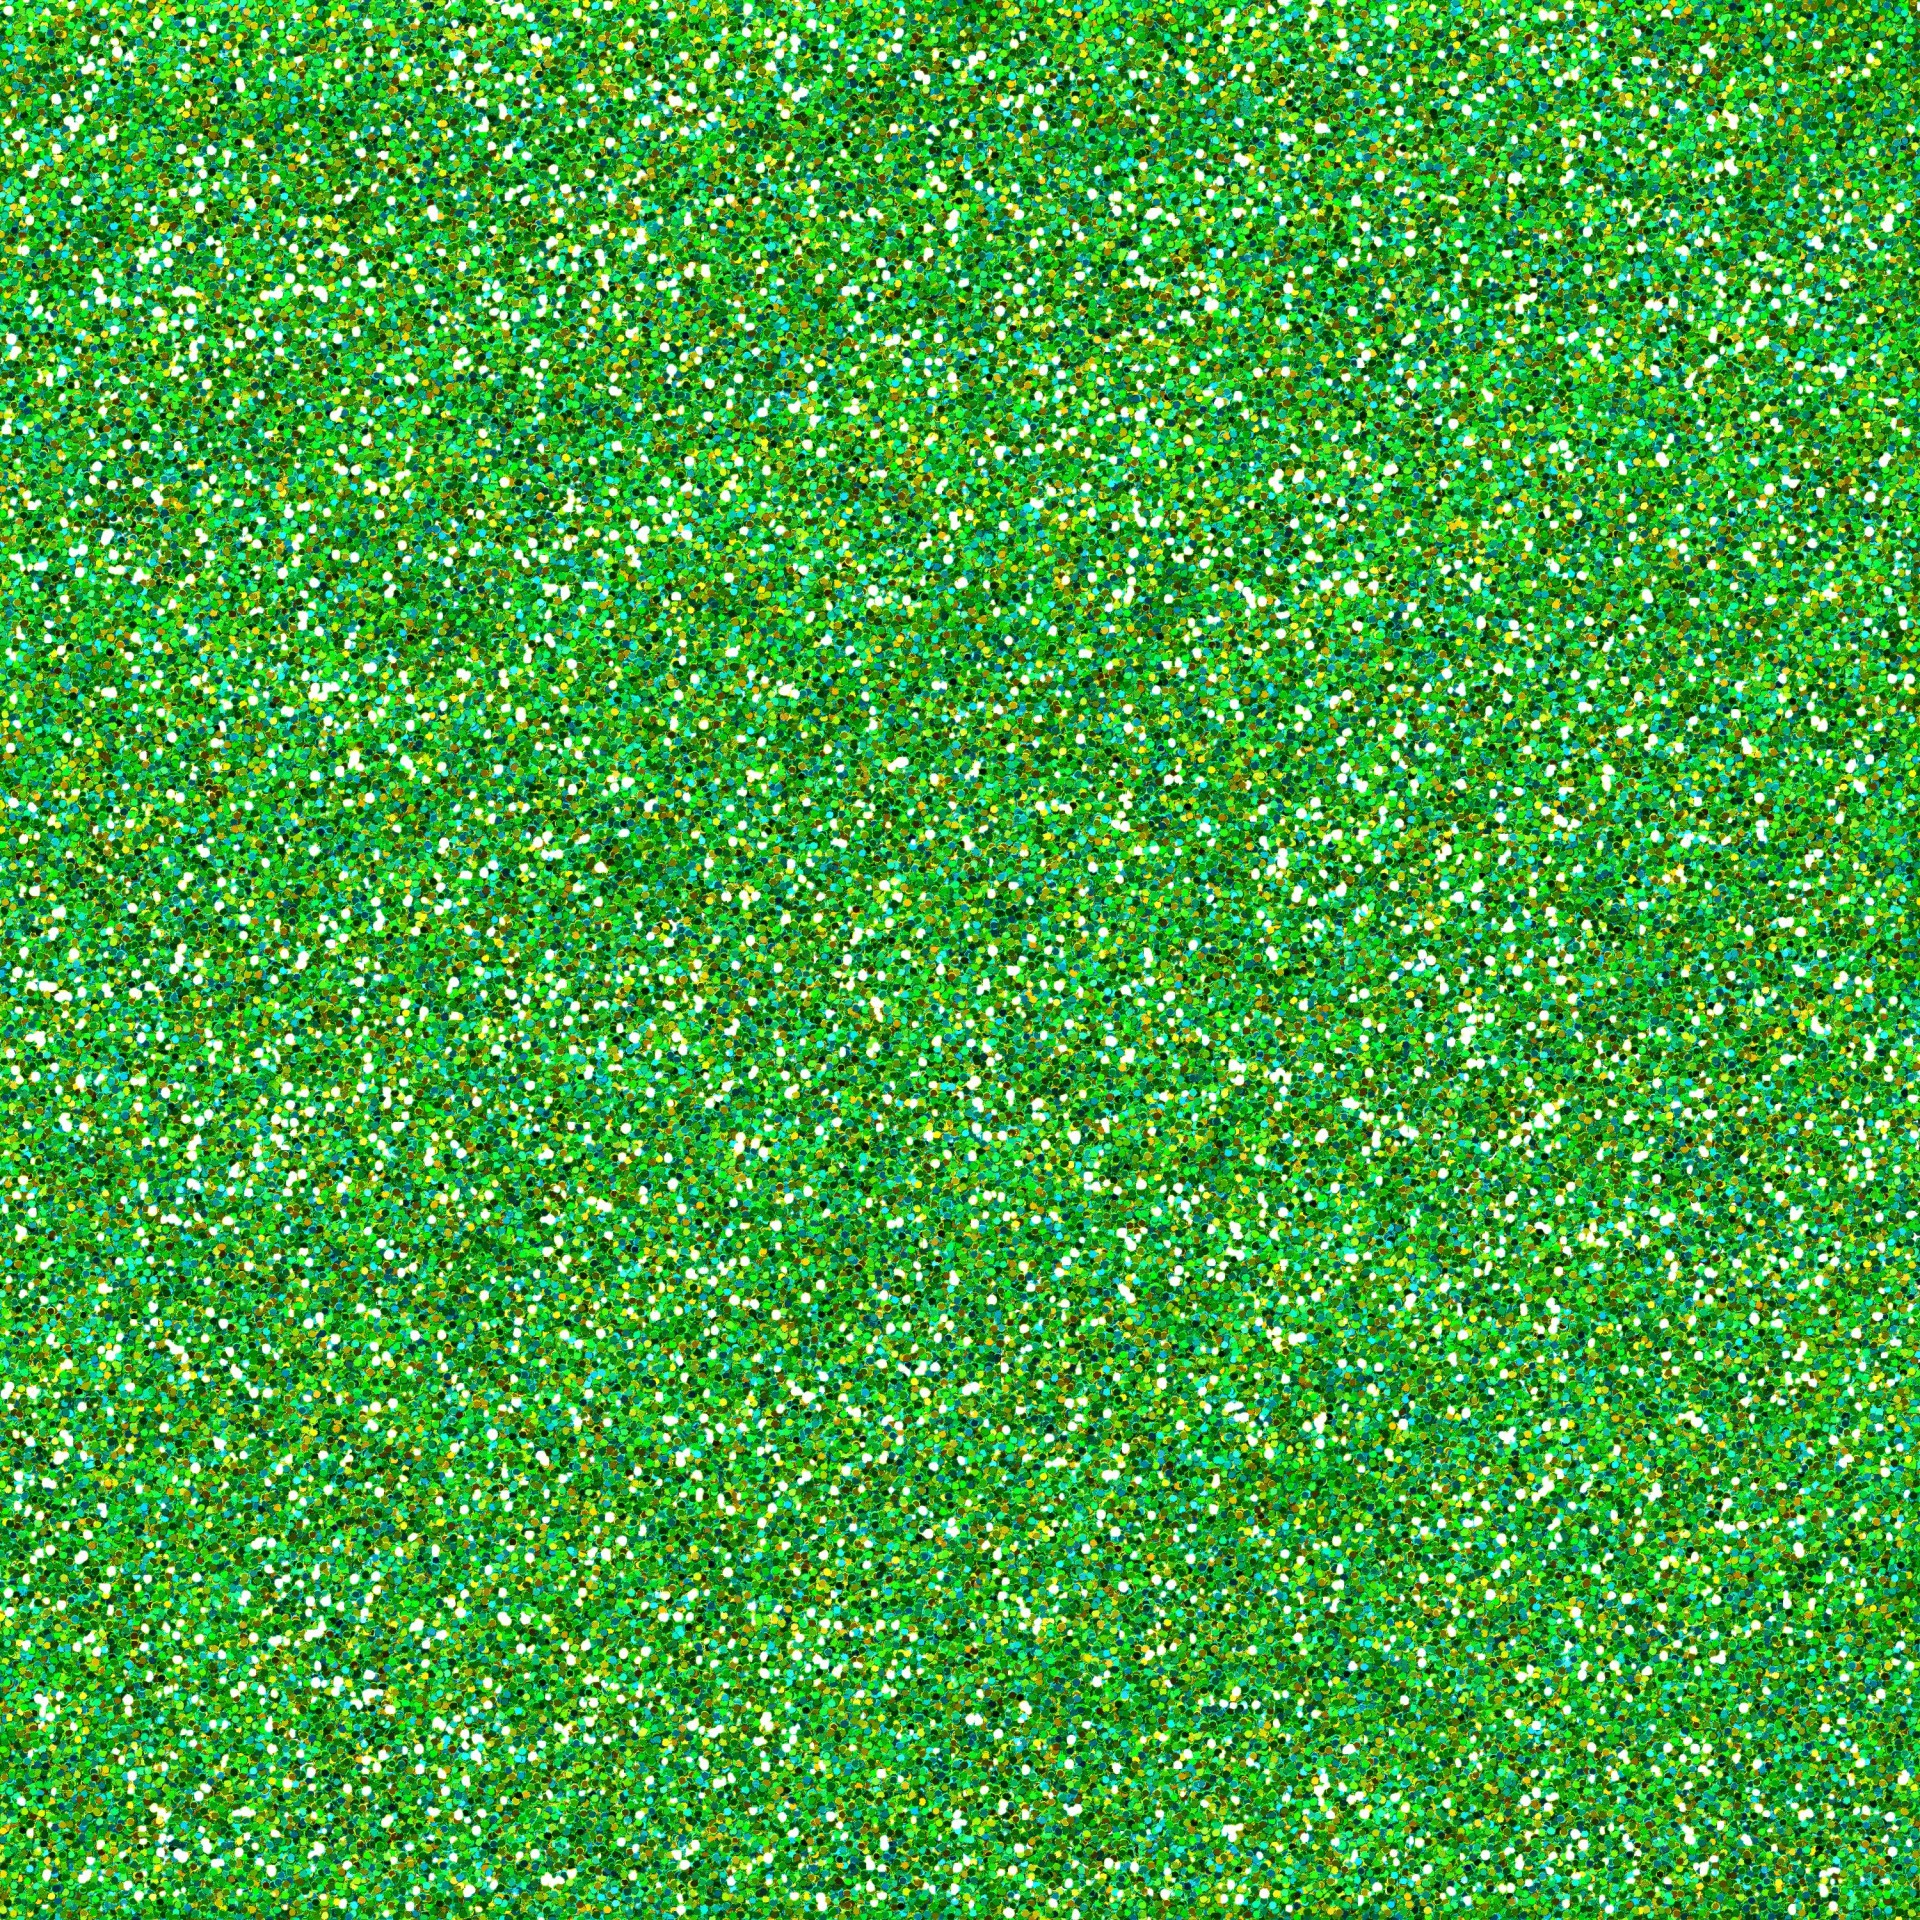 Metallic Green Glitter Texture Free Stock Photo - Public Domain Pictures